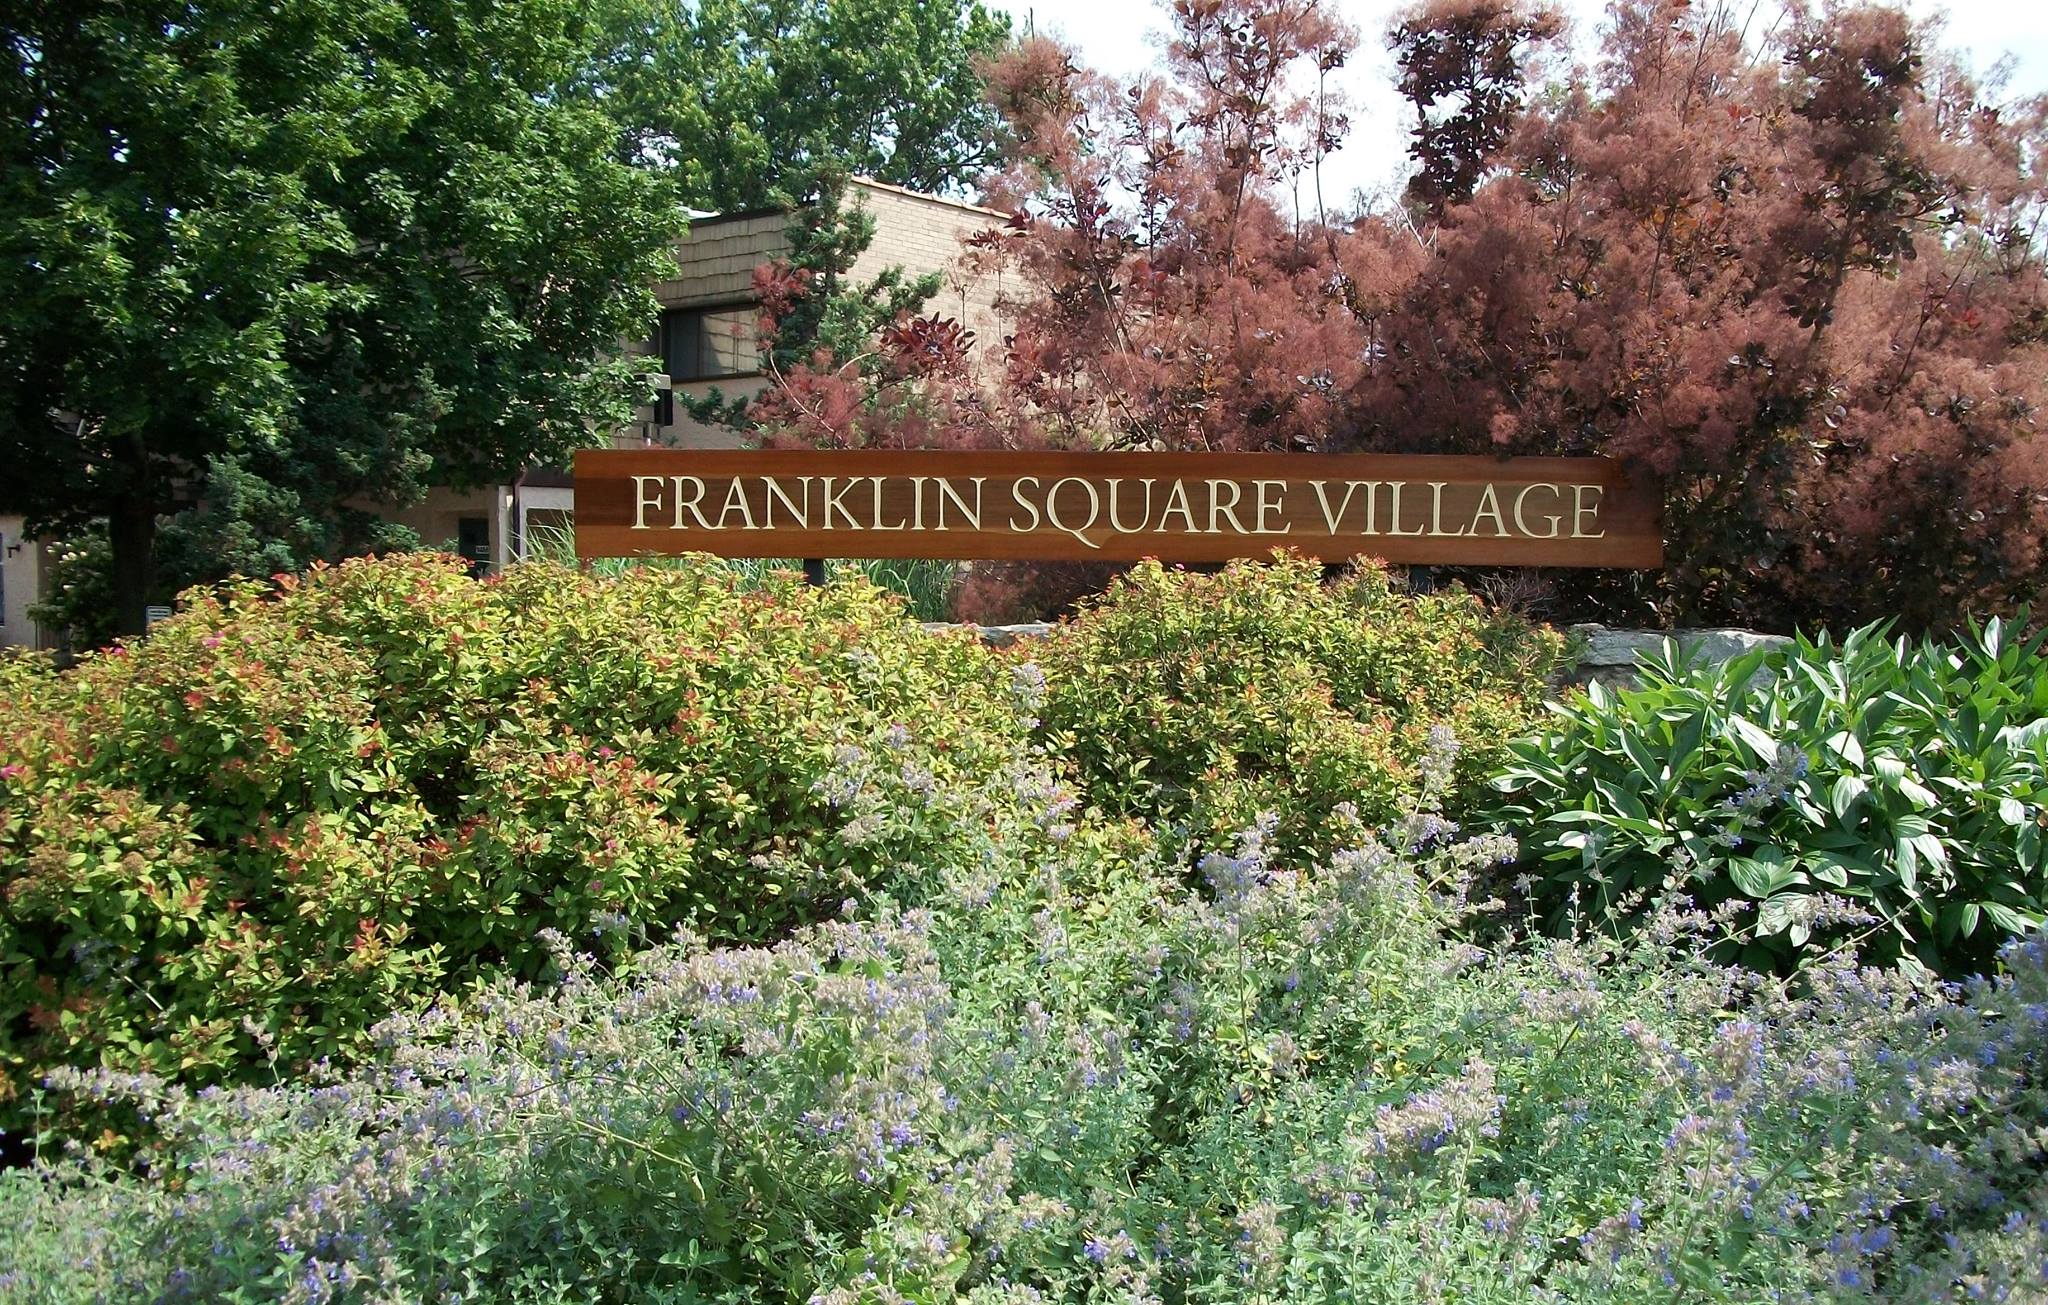 Franklin Square Village